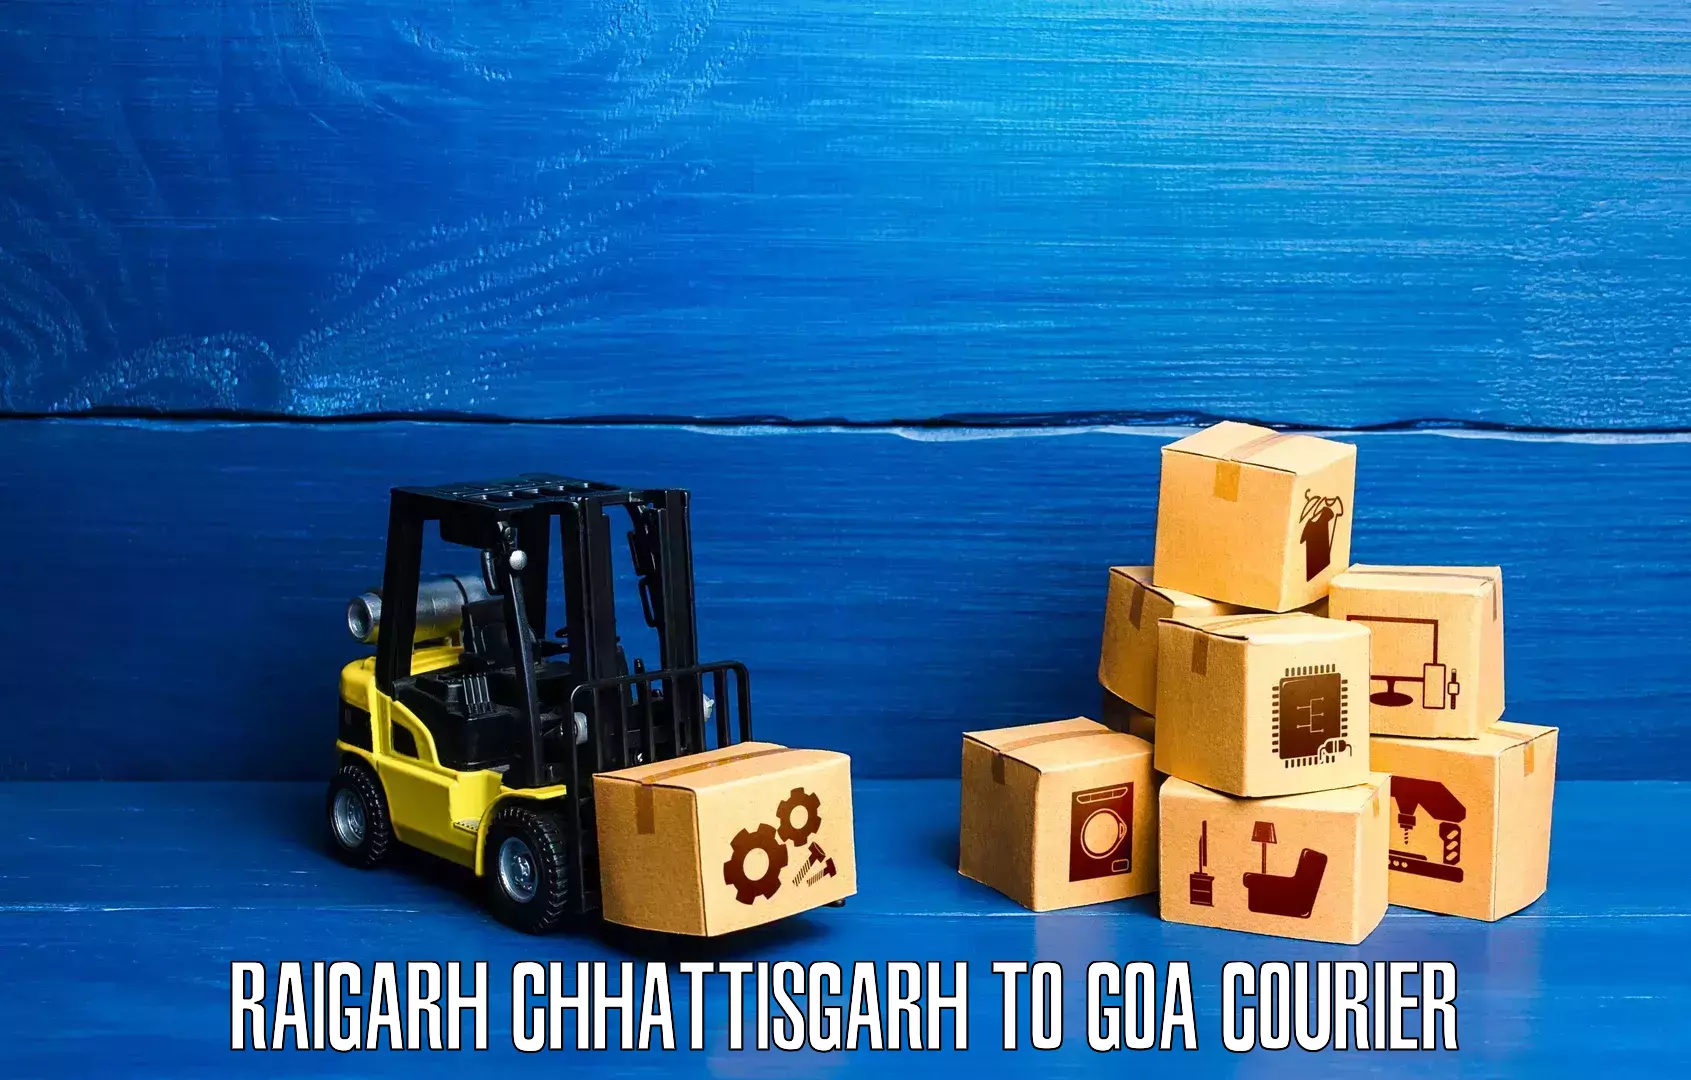 Express mail service Raigarh Chhattisgarh to Goa